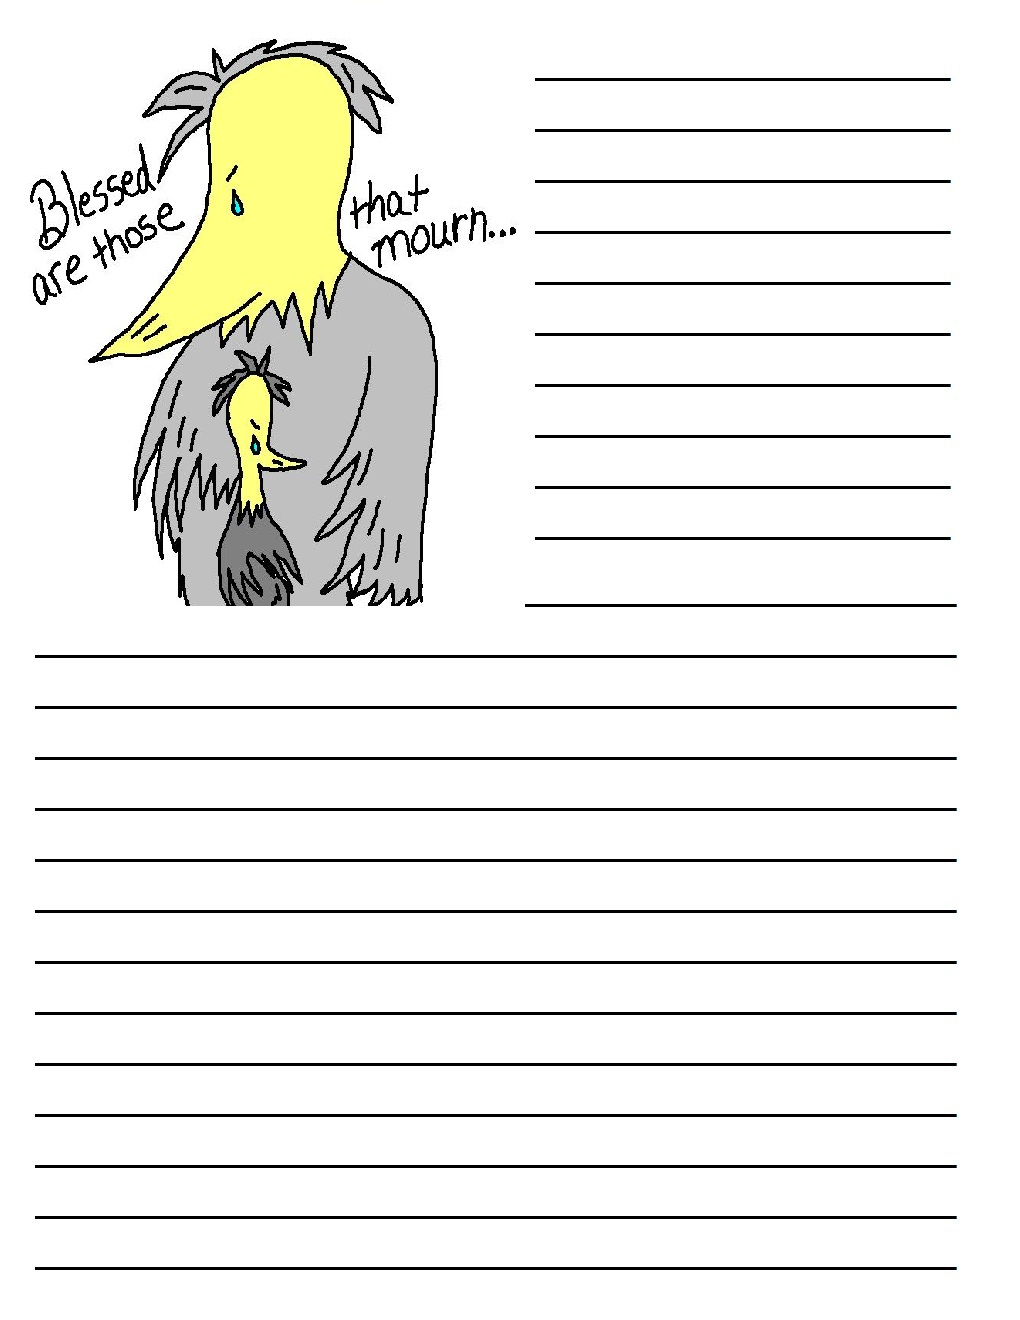 Free Paper Writing Program - yellowcap